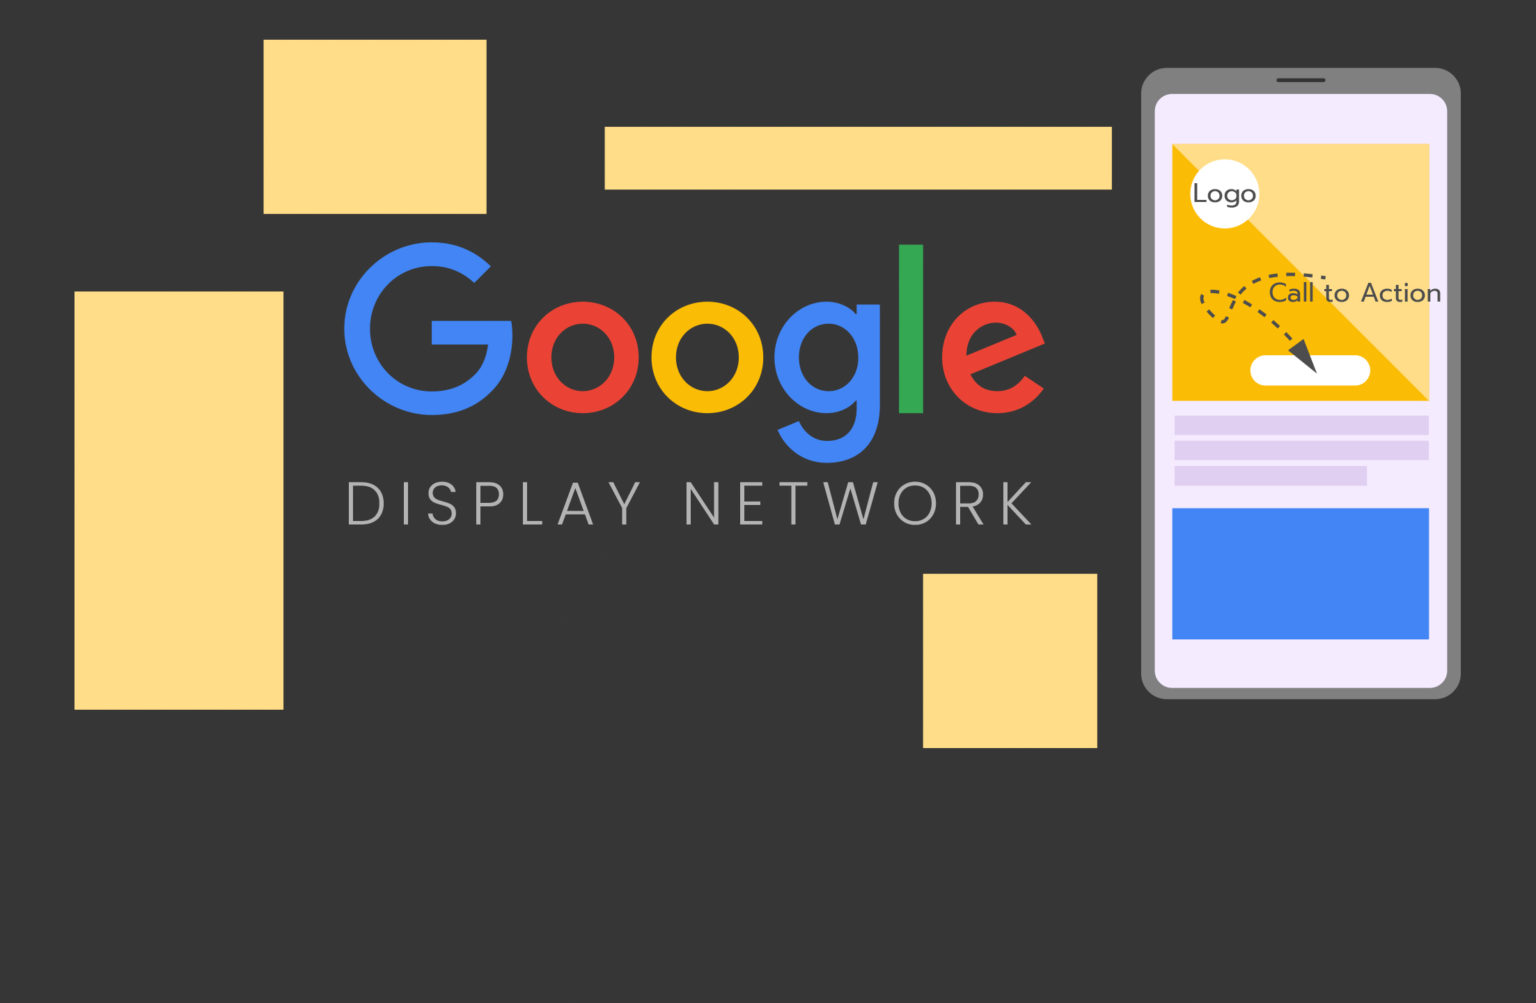 google display network